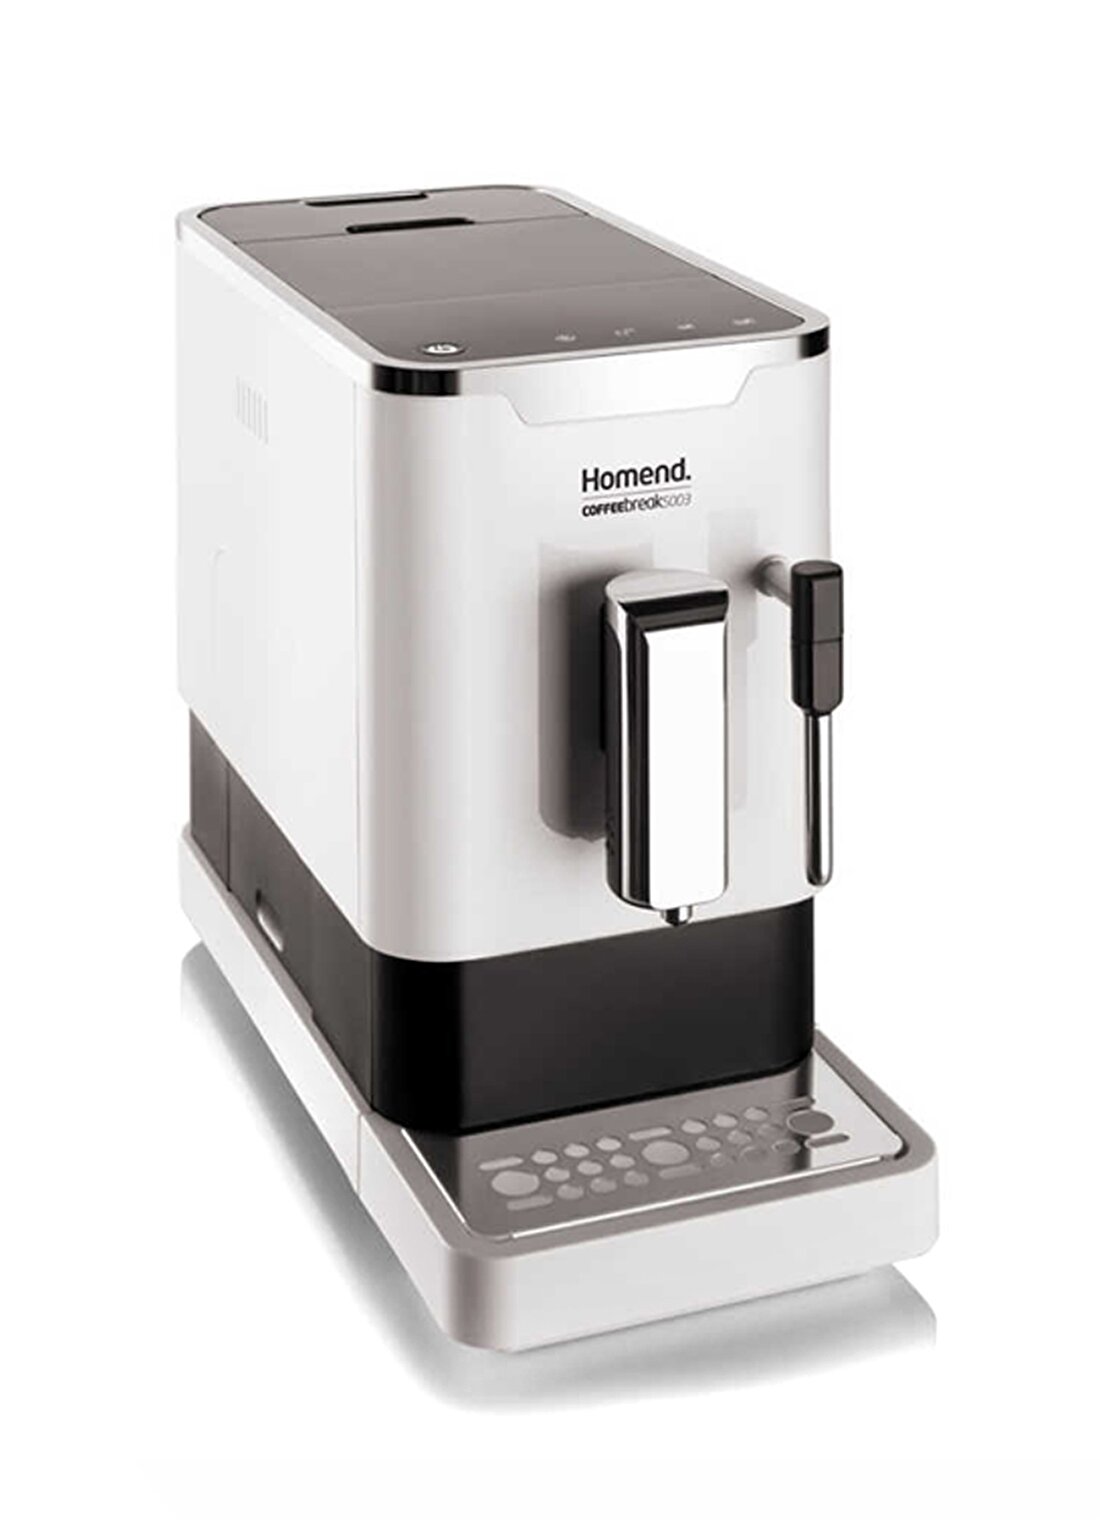 Homend Coffeebreak 5003 Tam Otomatik Espresso Kahve Makinesi